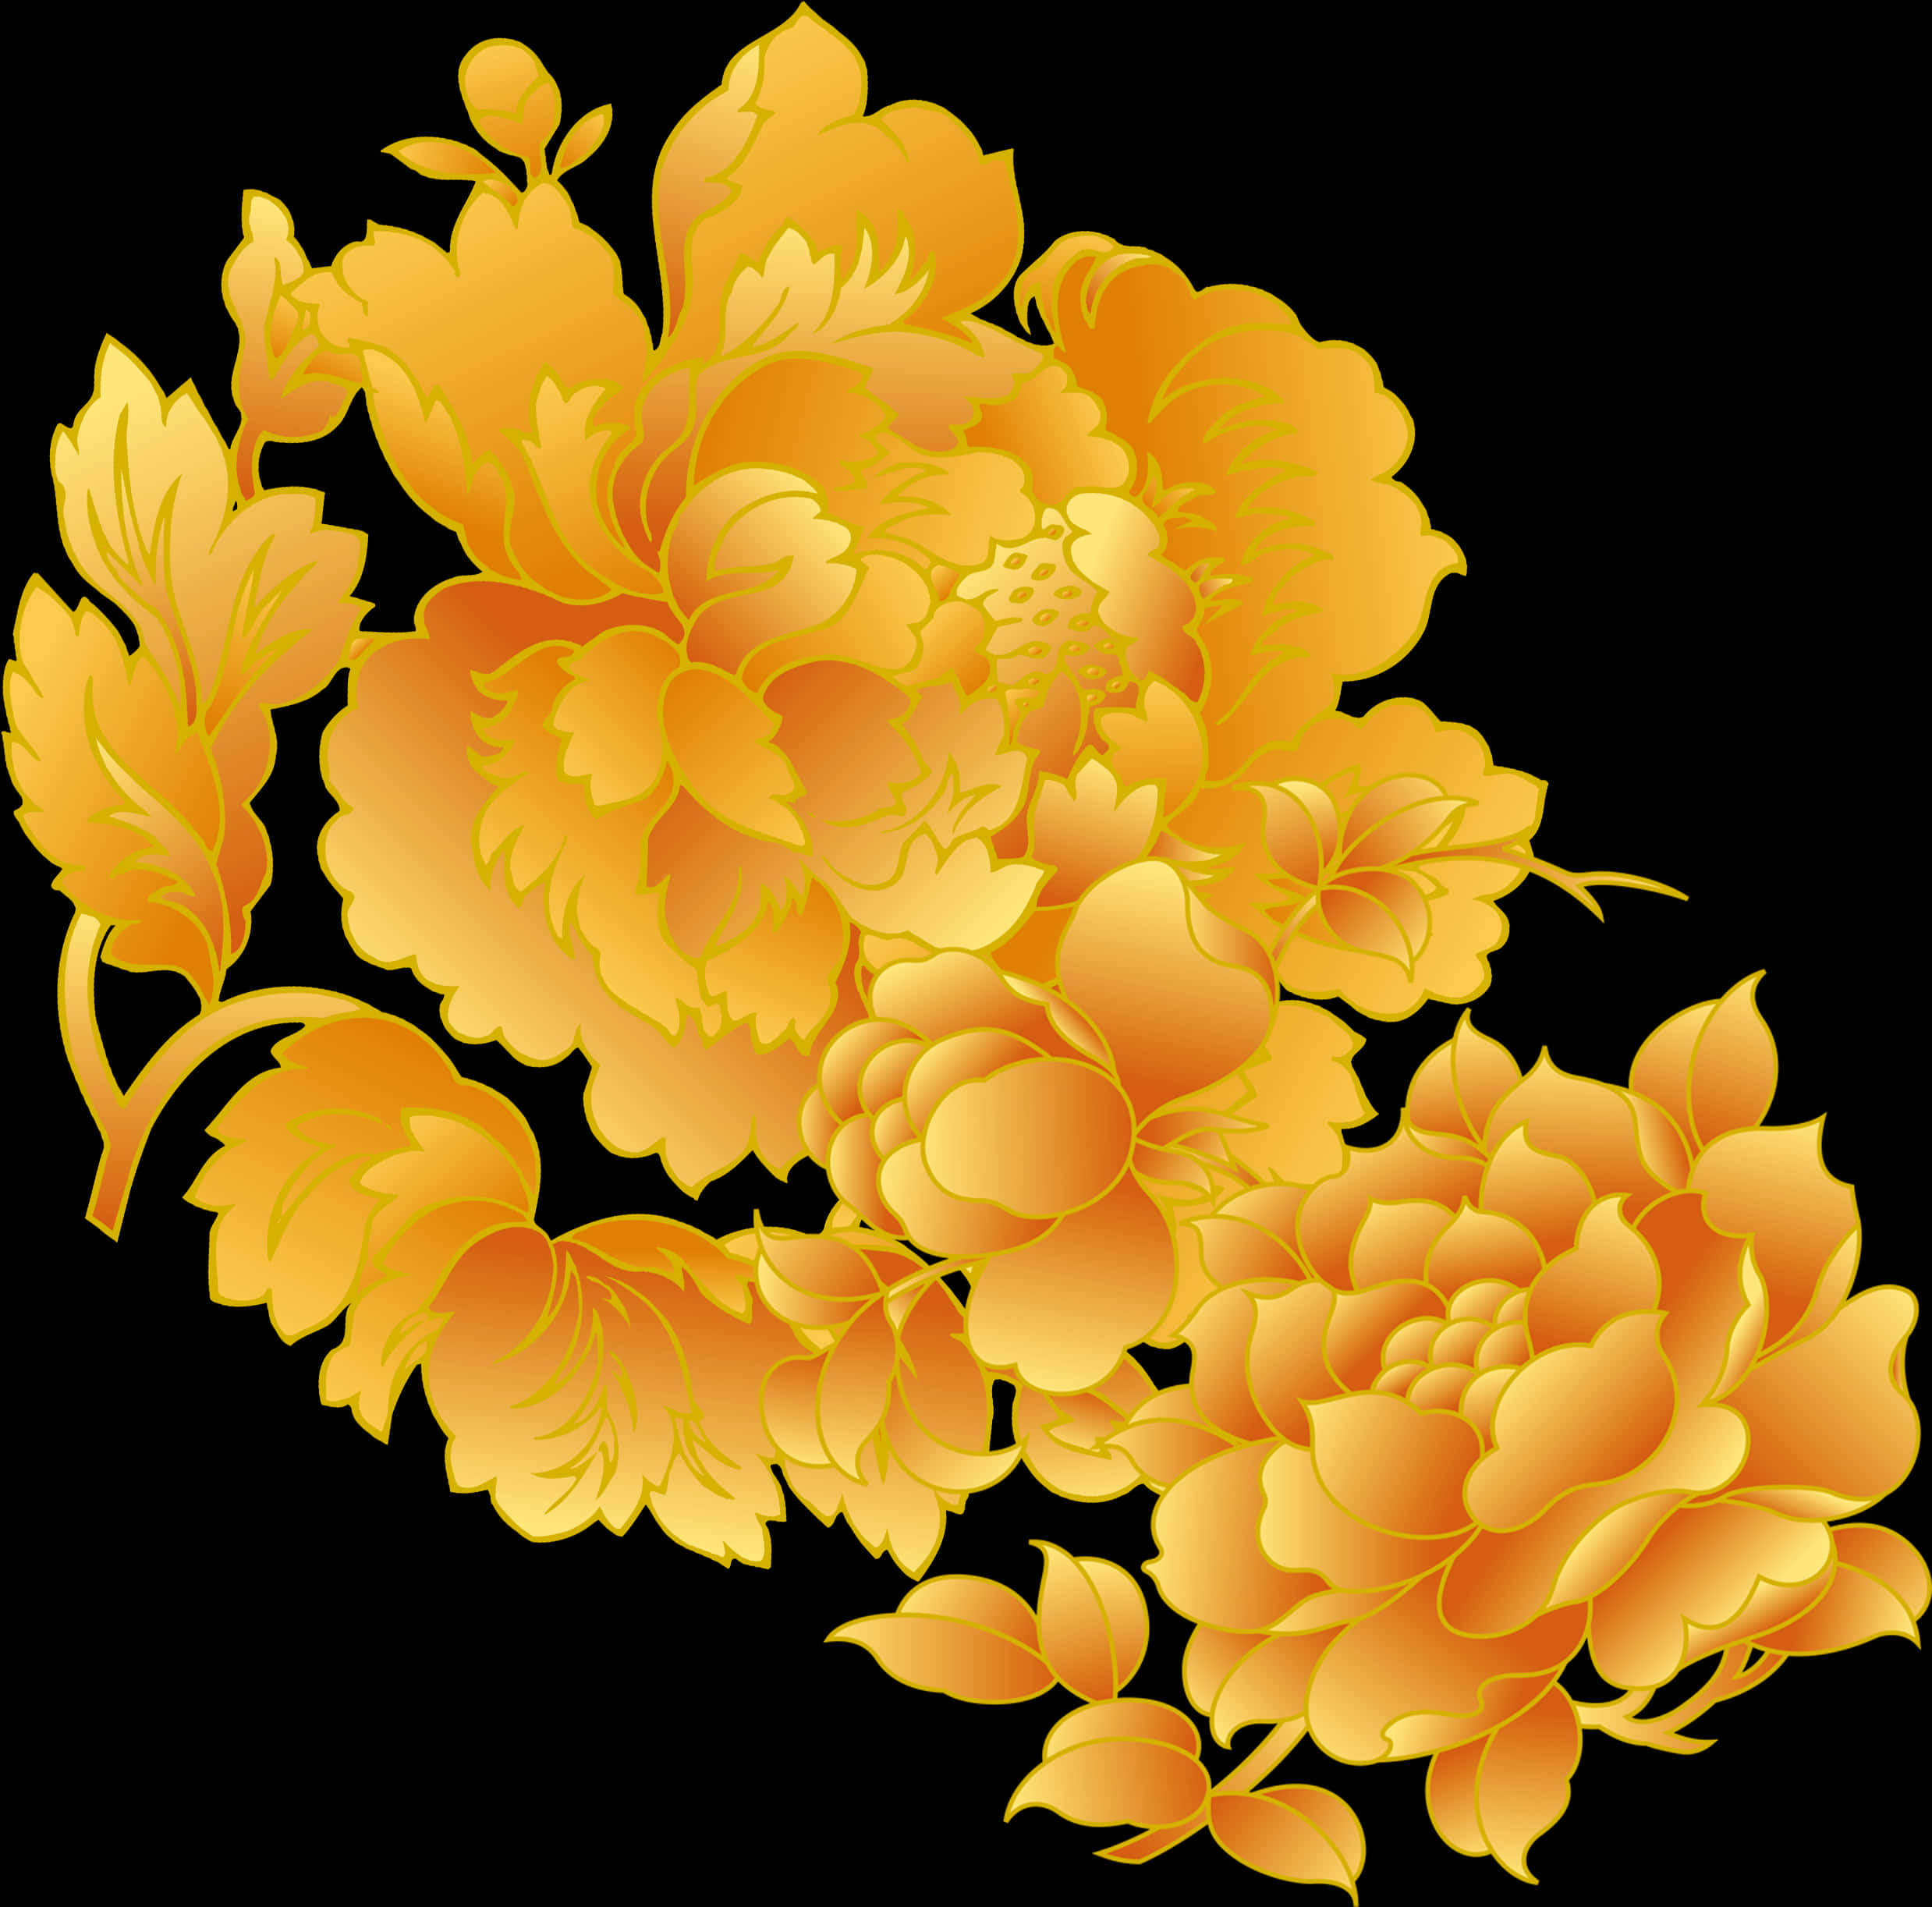 Golden Floral Design Graphic